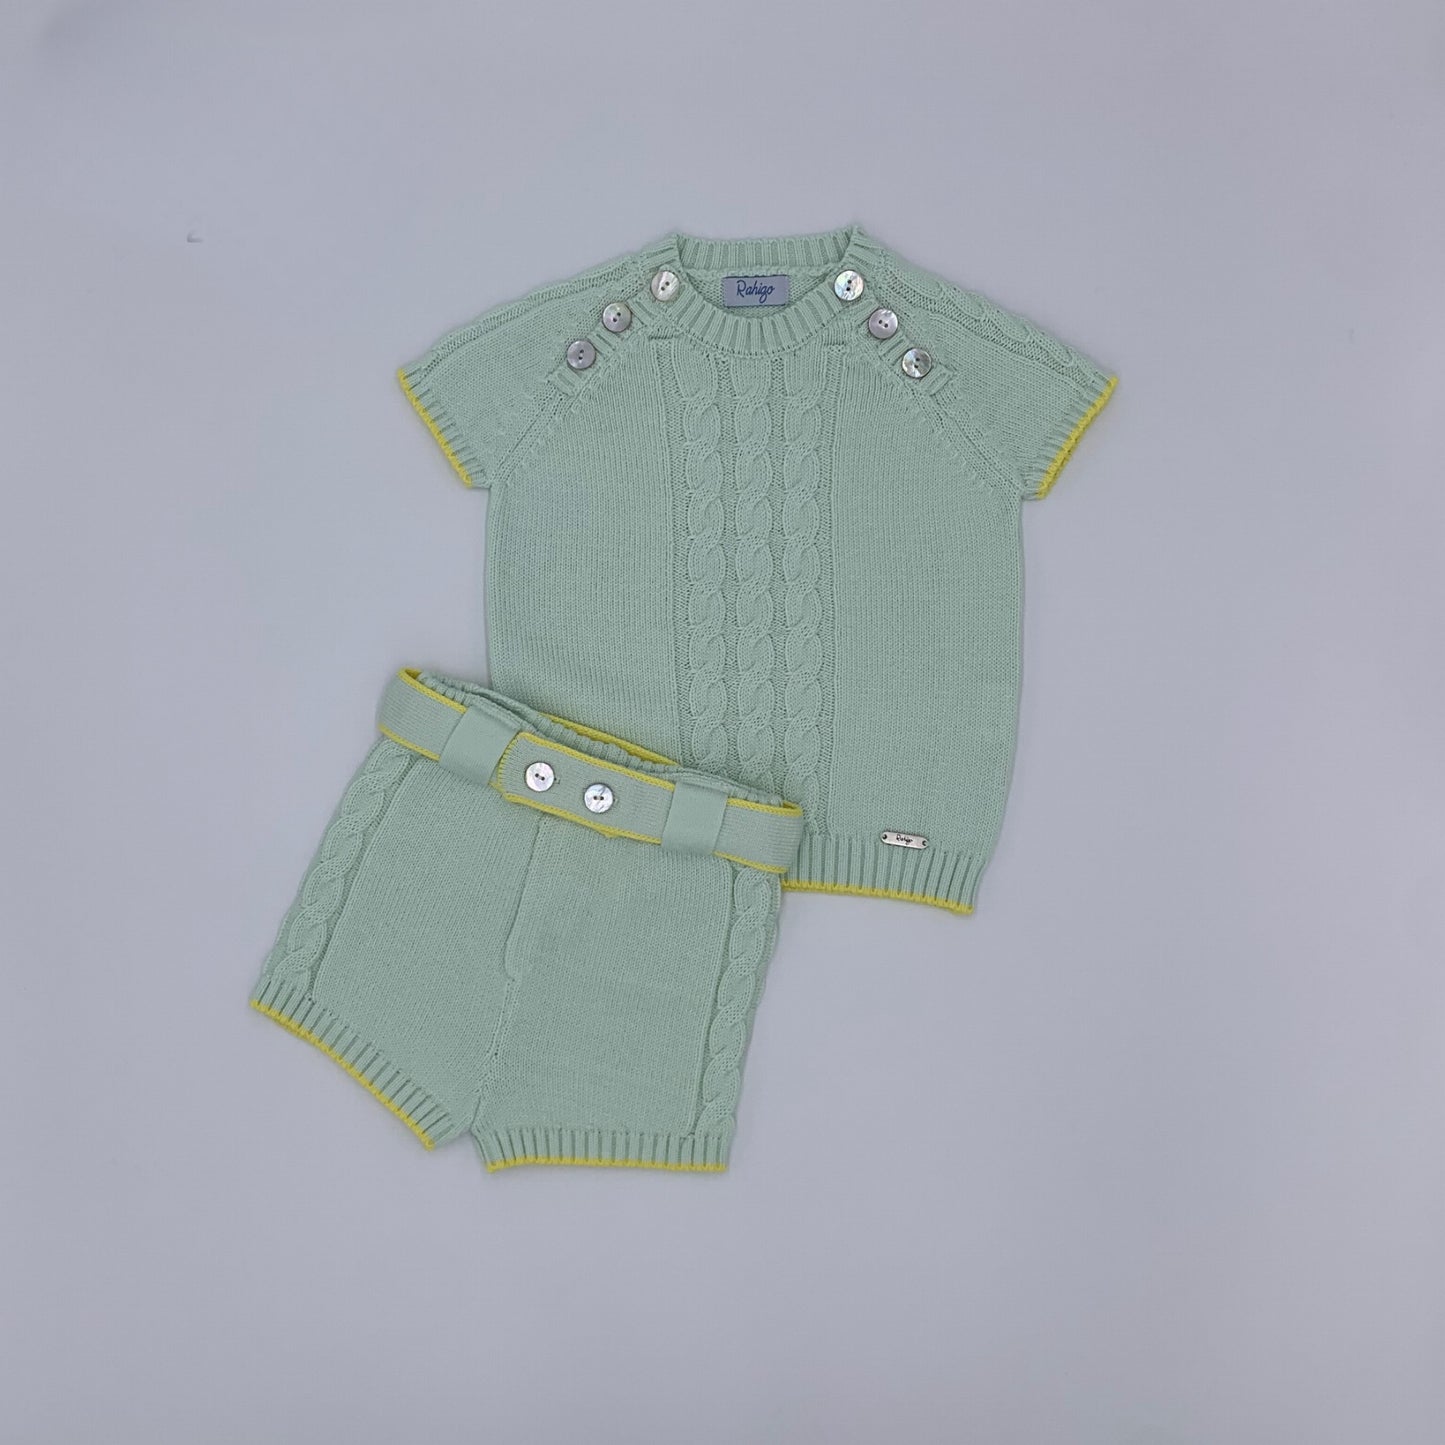 Rahigo mint green and yellow boys shorts set - Adora Childrenswear